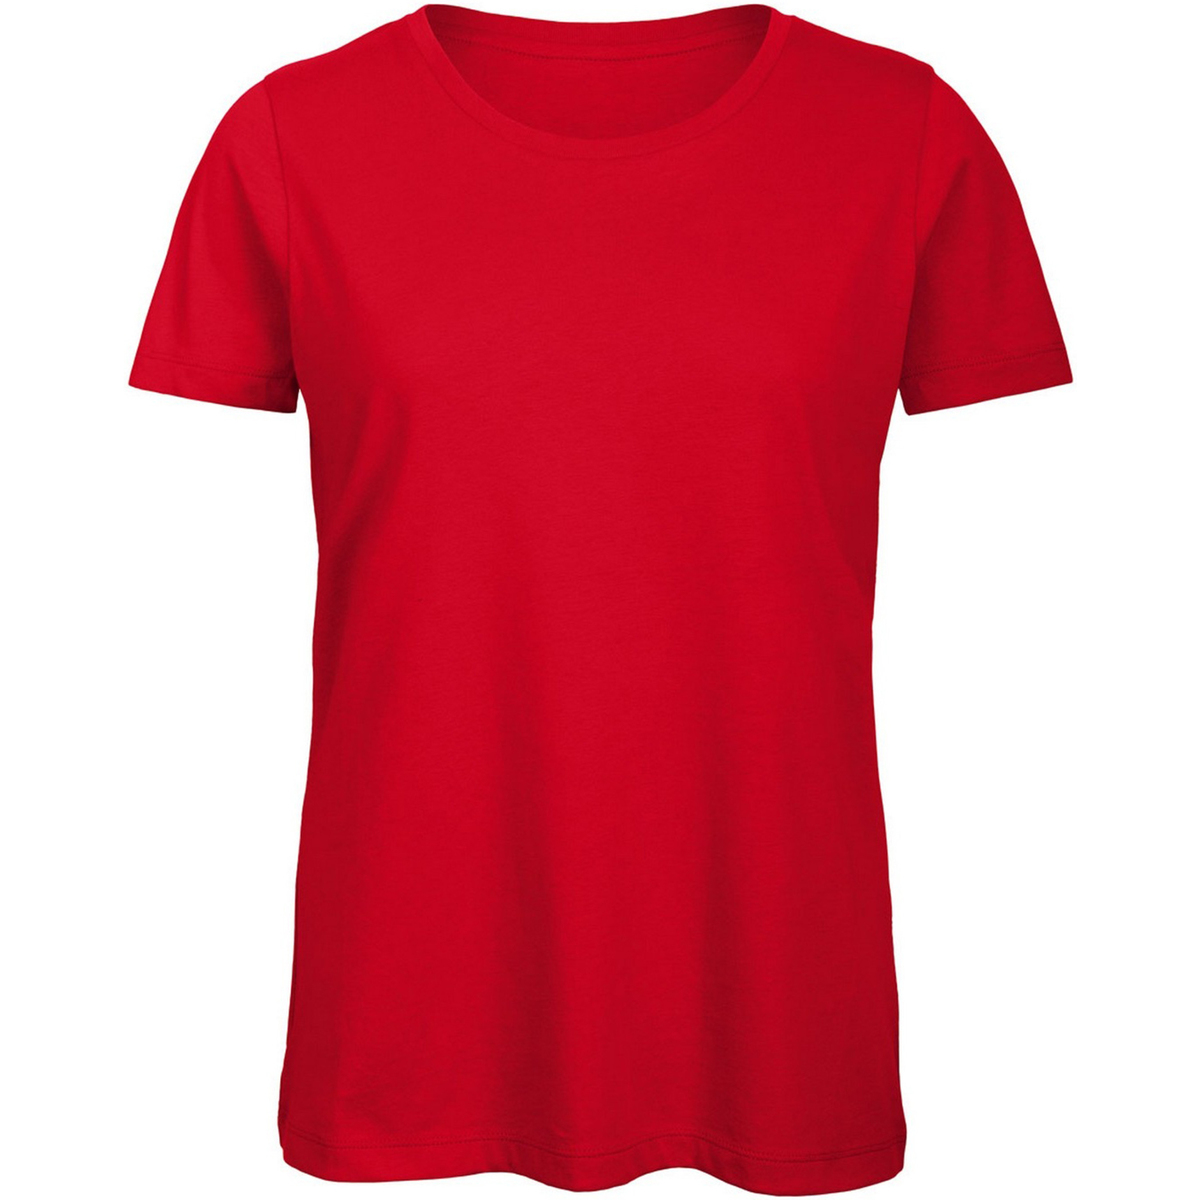 Vêtements Femme Durable New balance Sweat-shirt Essentials Crew TW043 Rouge